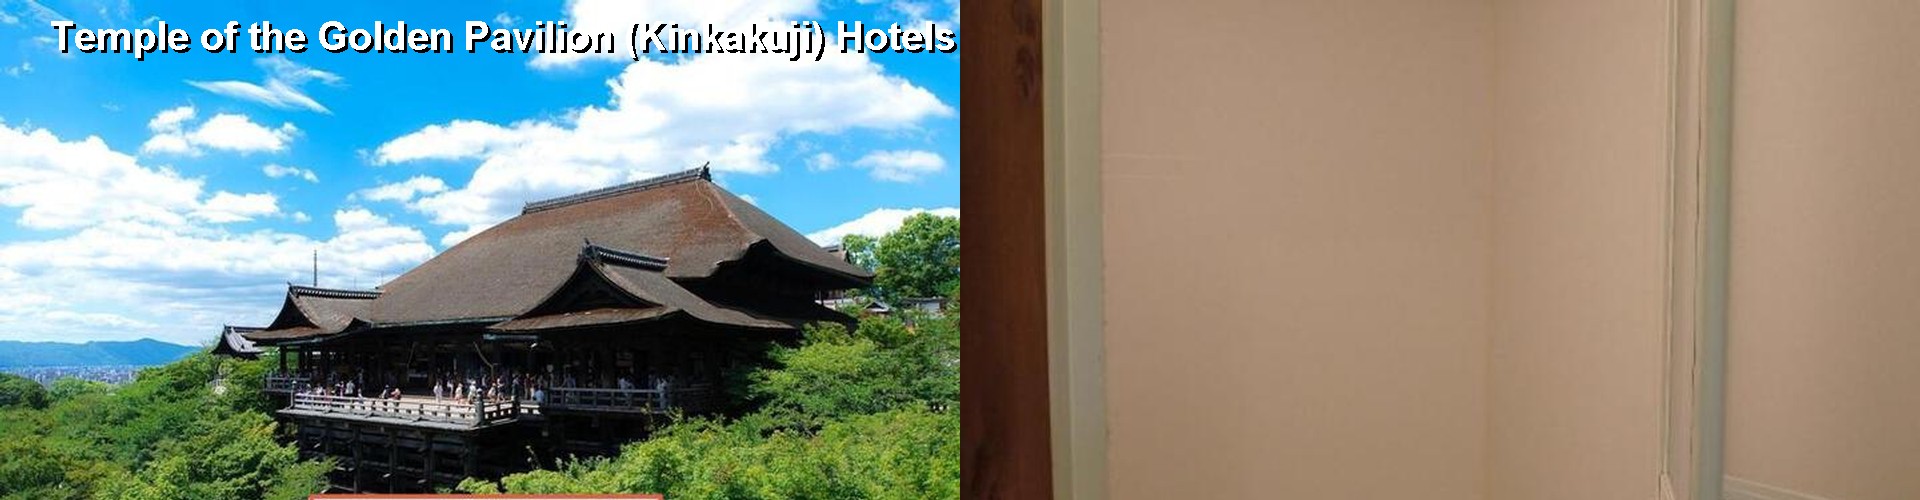 4 Best Hotels near Temple of the Golden Pavilion (Kinkakuji)